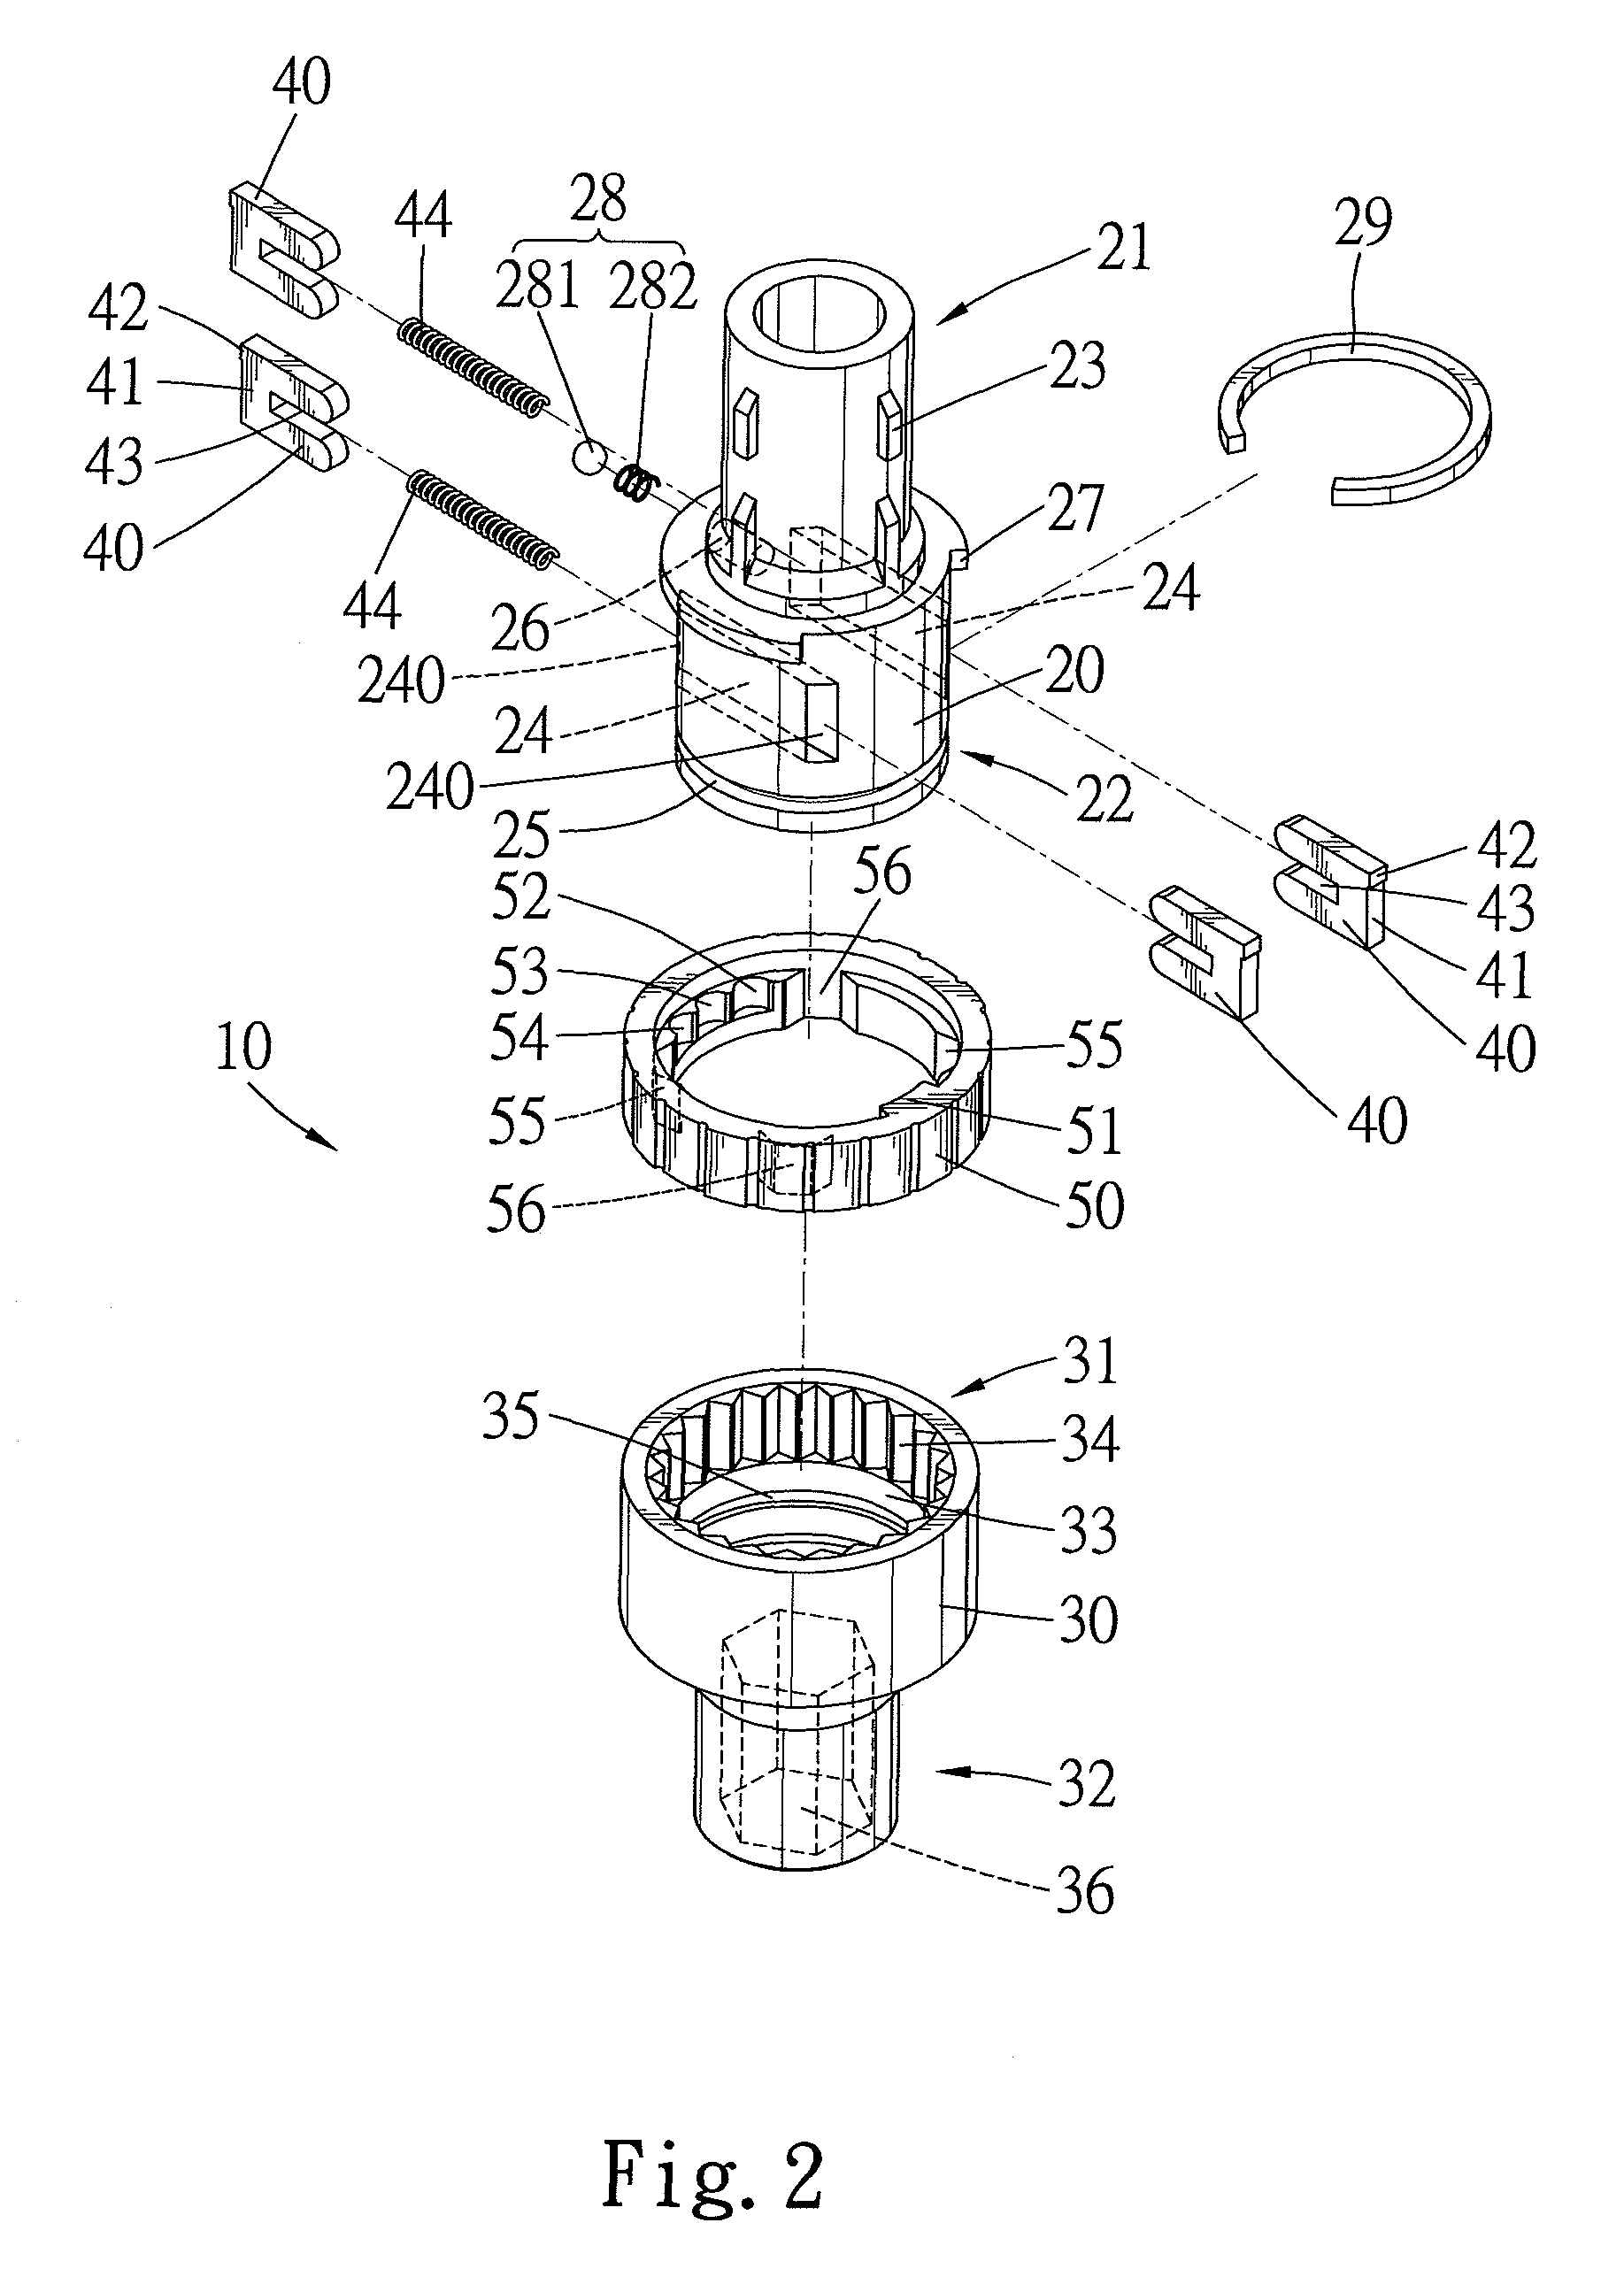 Screwdriver with ratchet mechanism